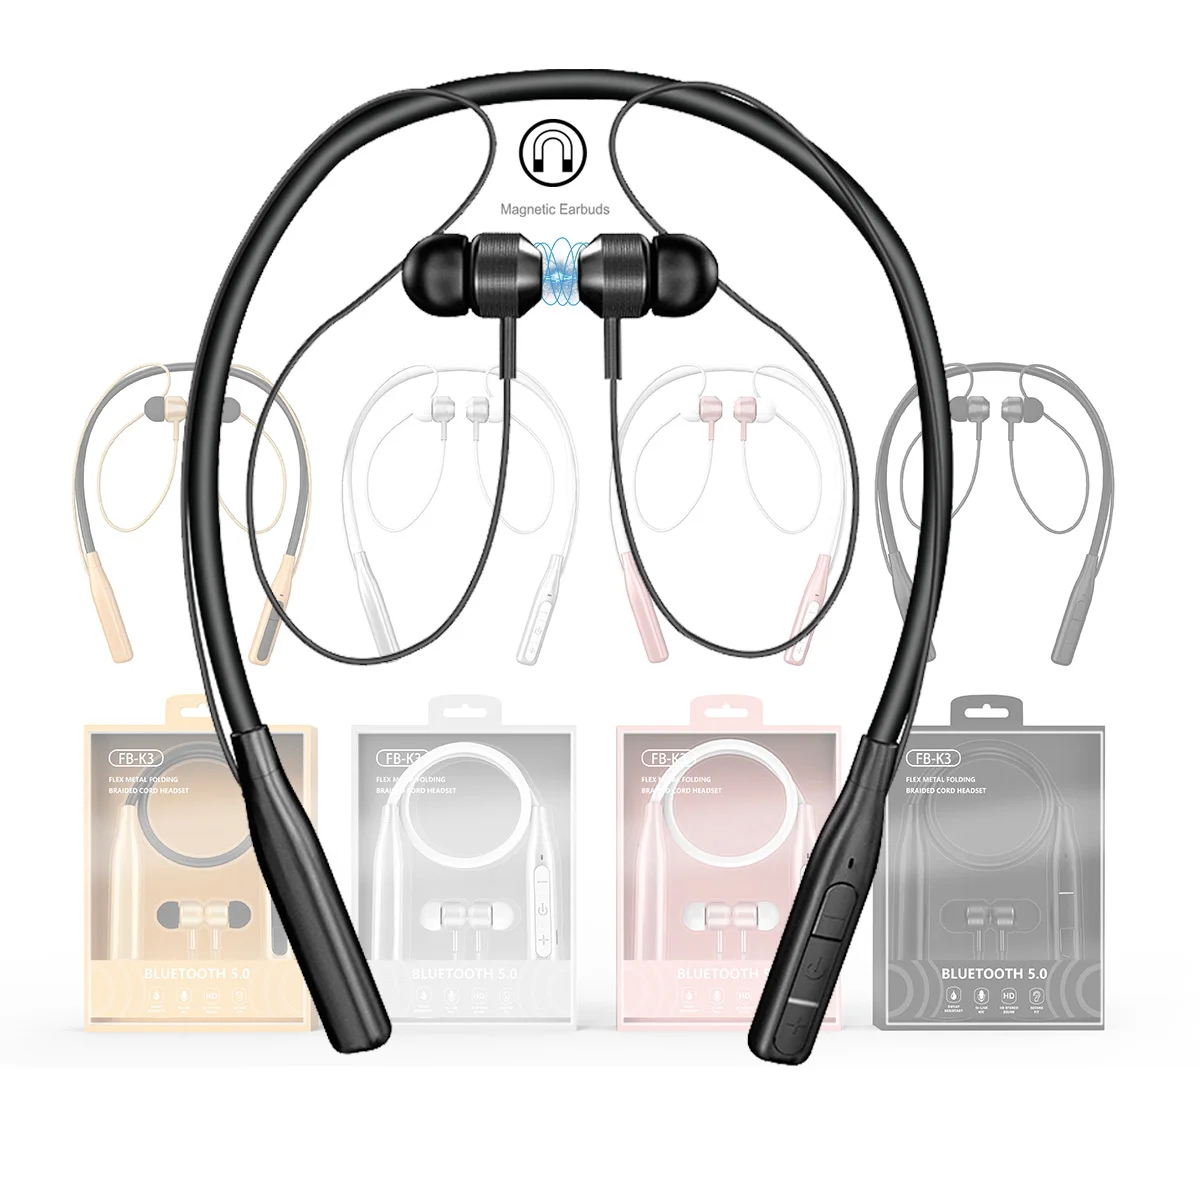 

2020 New super bass Wireless blue tooth 5.0 Earphone Earbuds headphone ANC neckband headset neck band